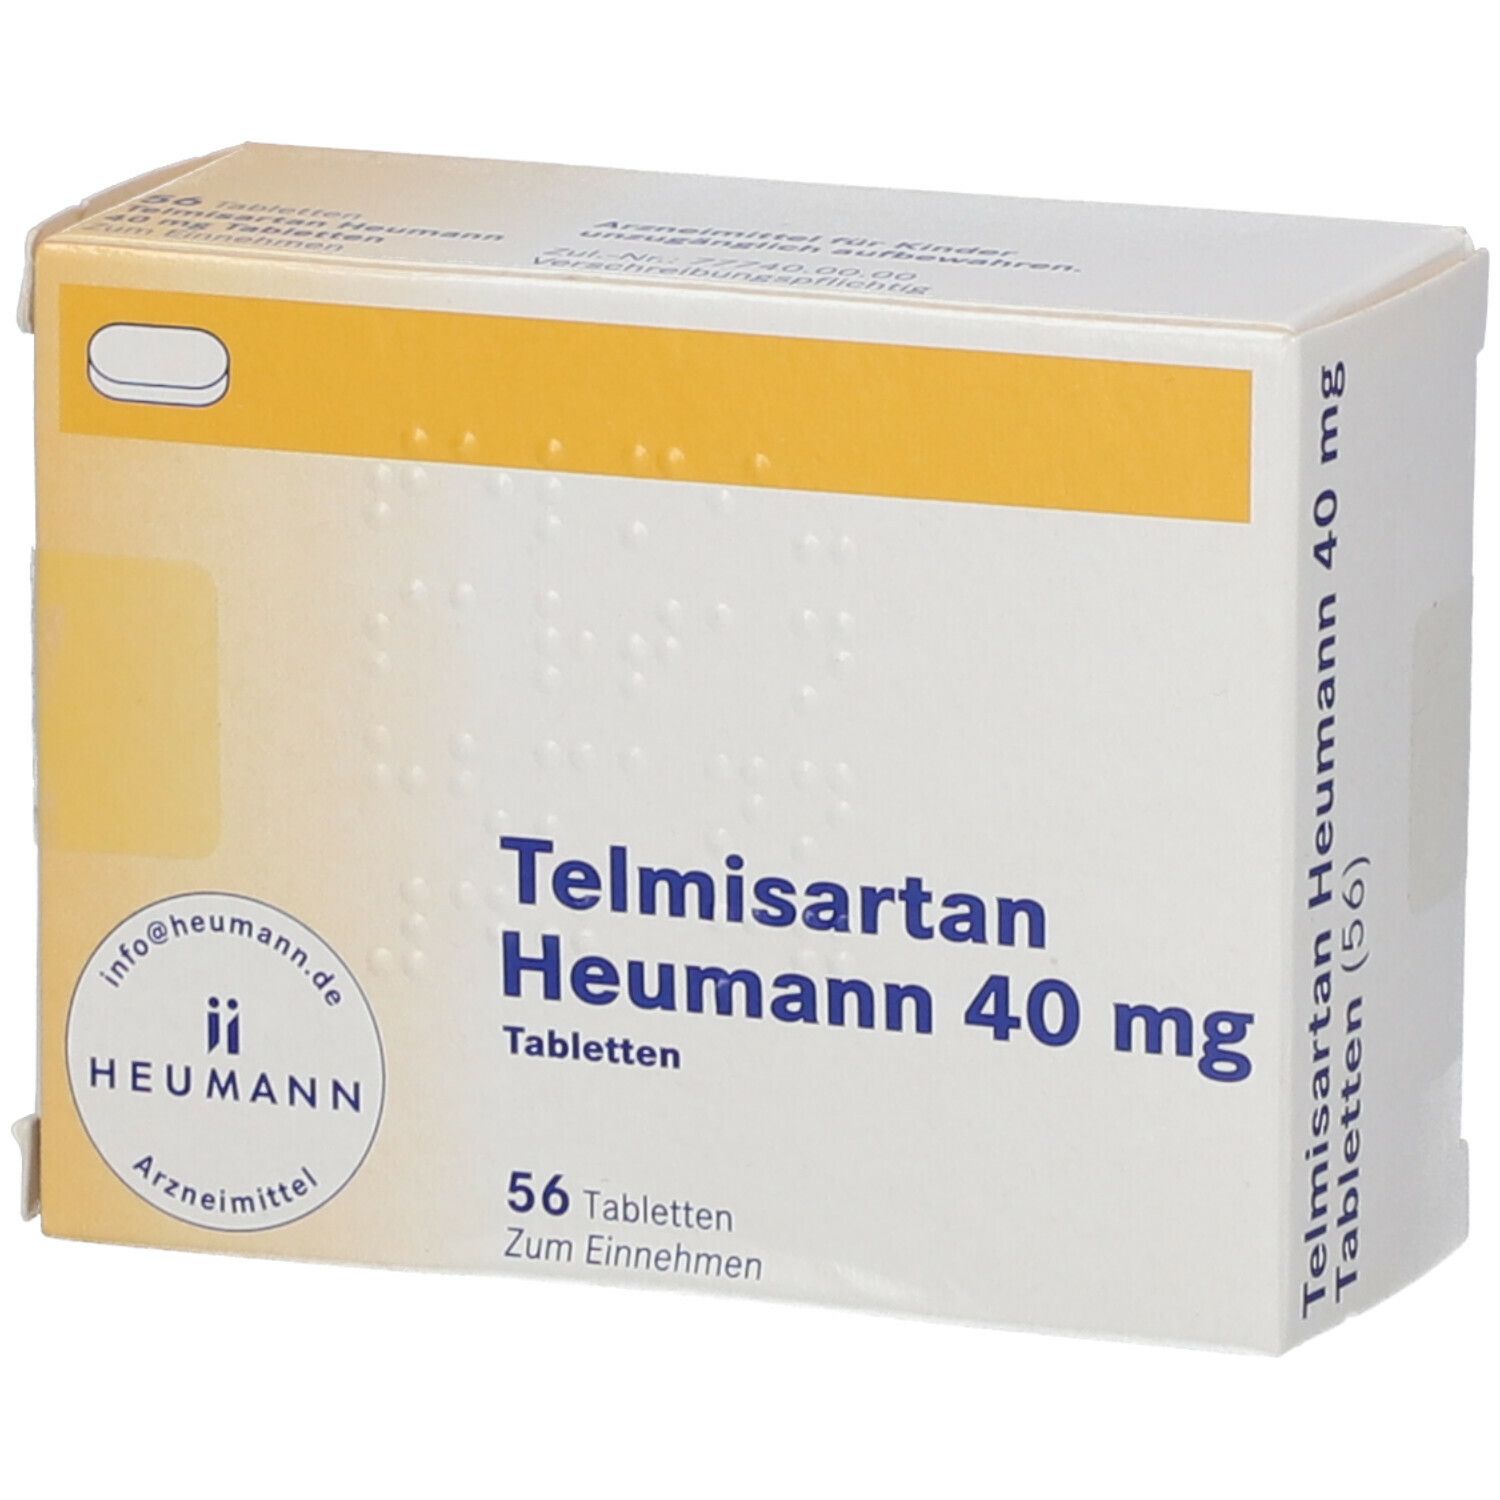 Telmisartan Heumann 40 mg